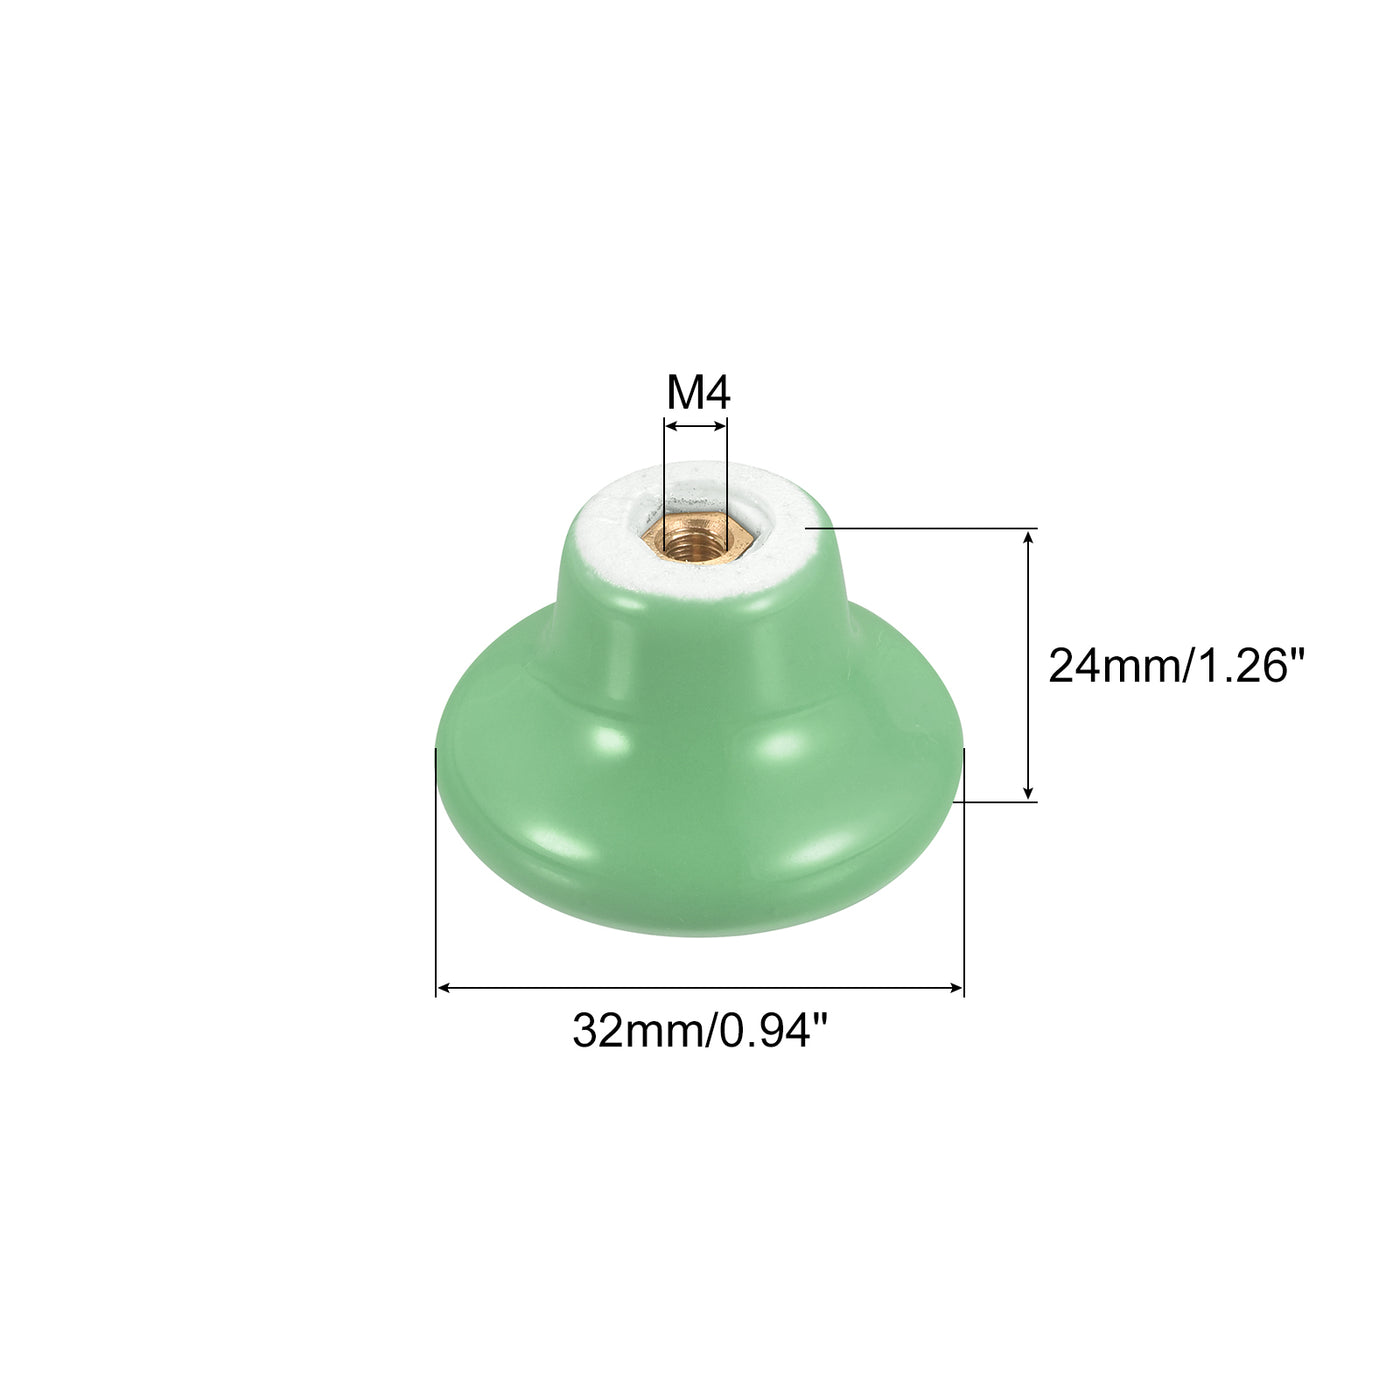 uxcell Uxcell Ceramic Drawer Knobs 10pcs Mushroom Shape Pulls 0.94"x1.26" for Dresser(Green)